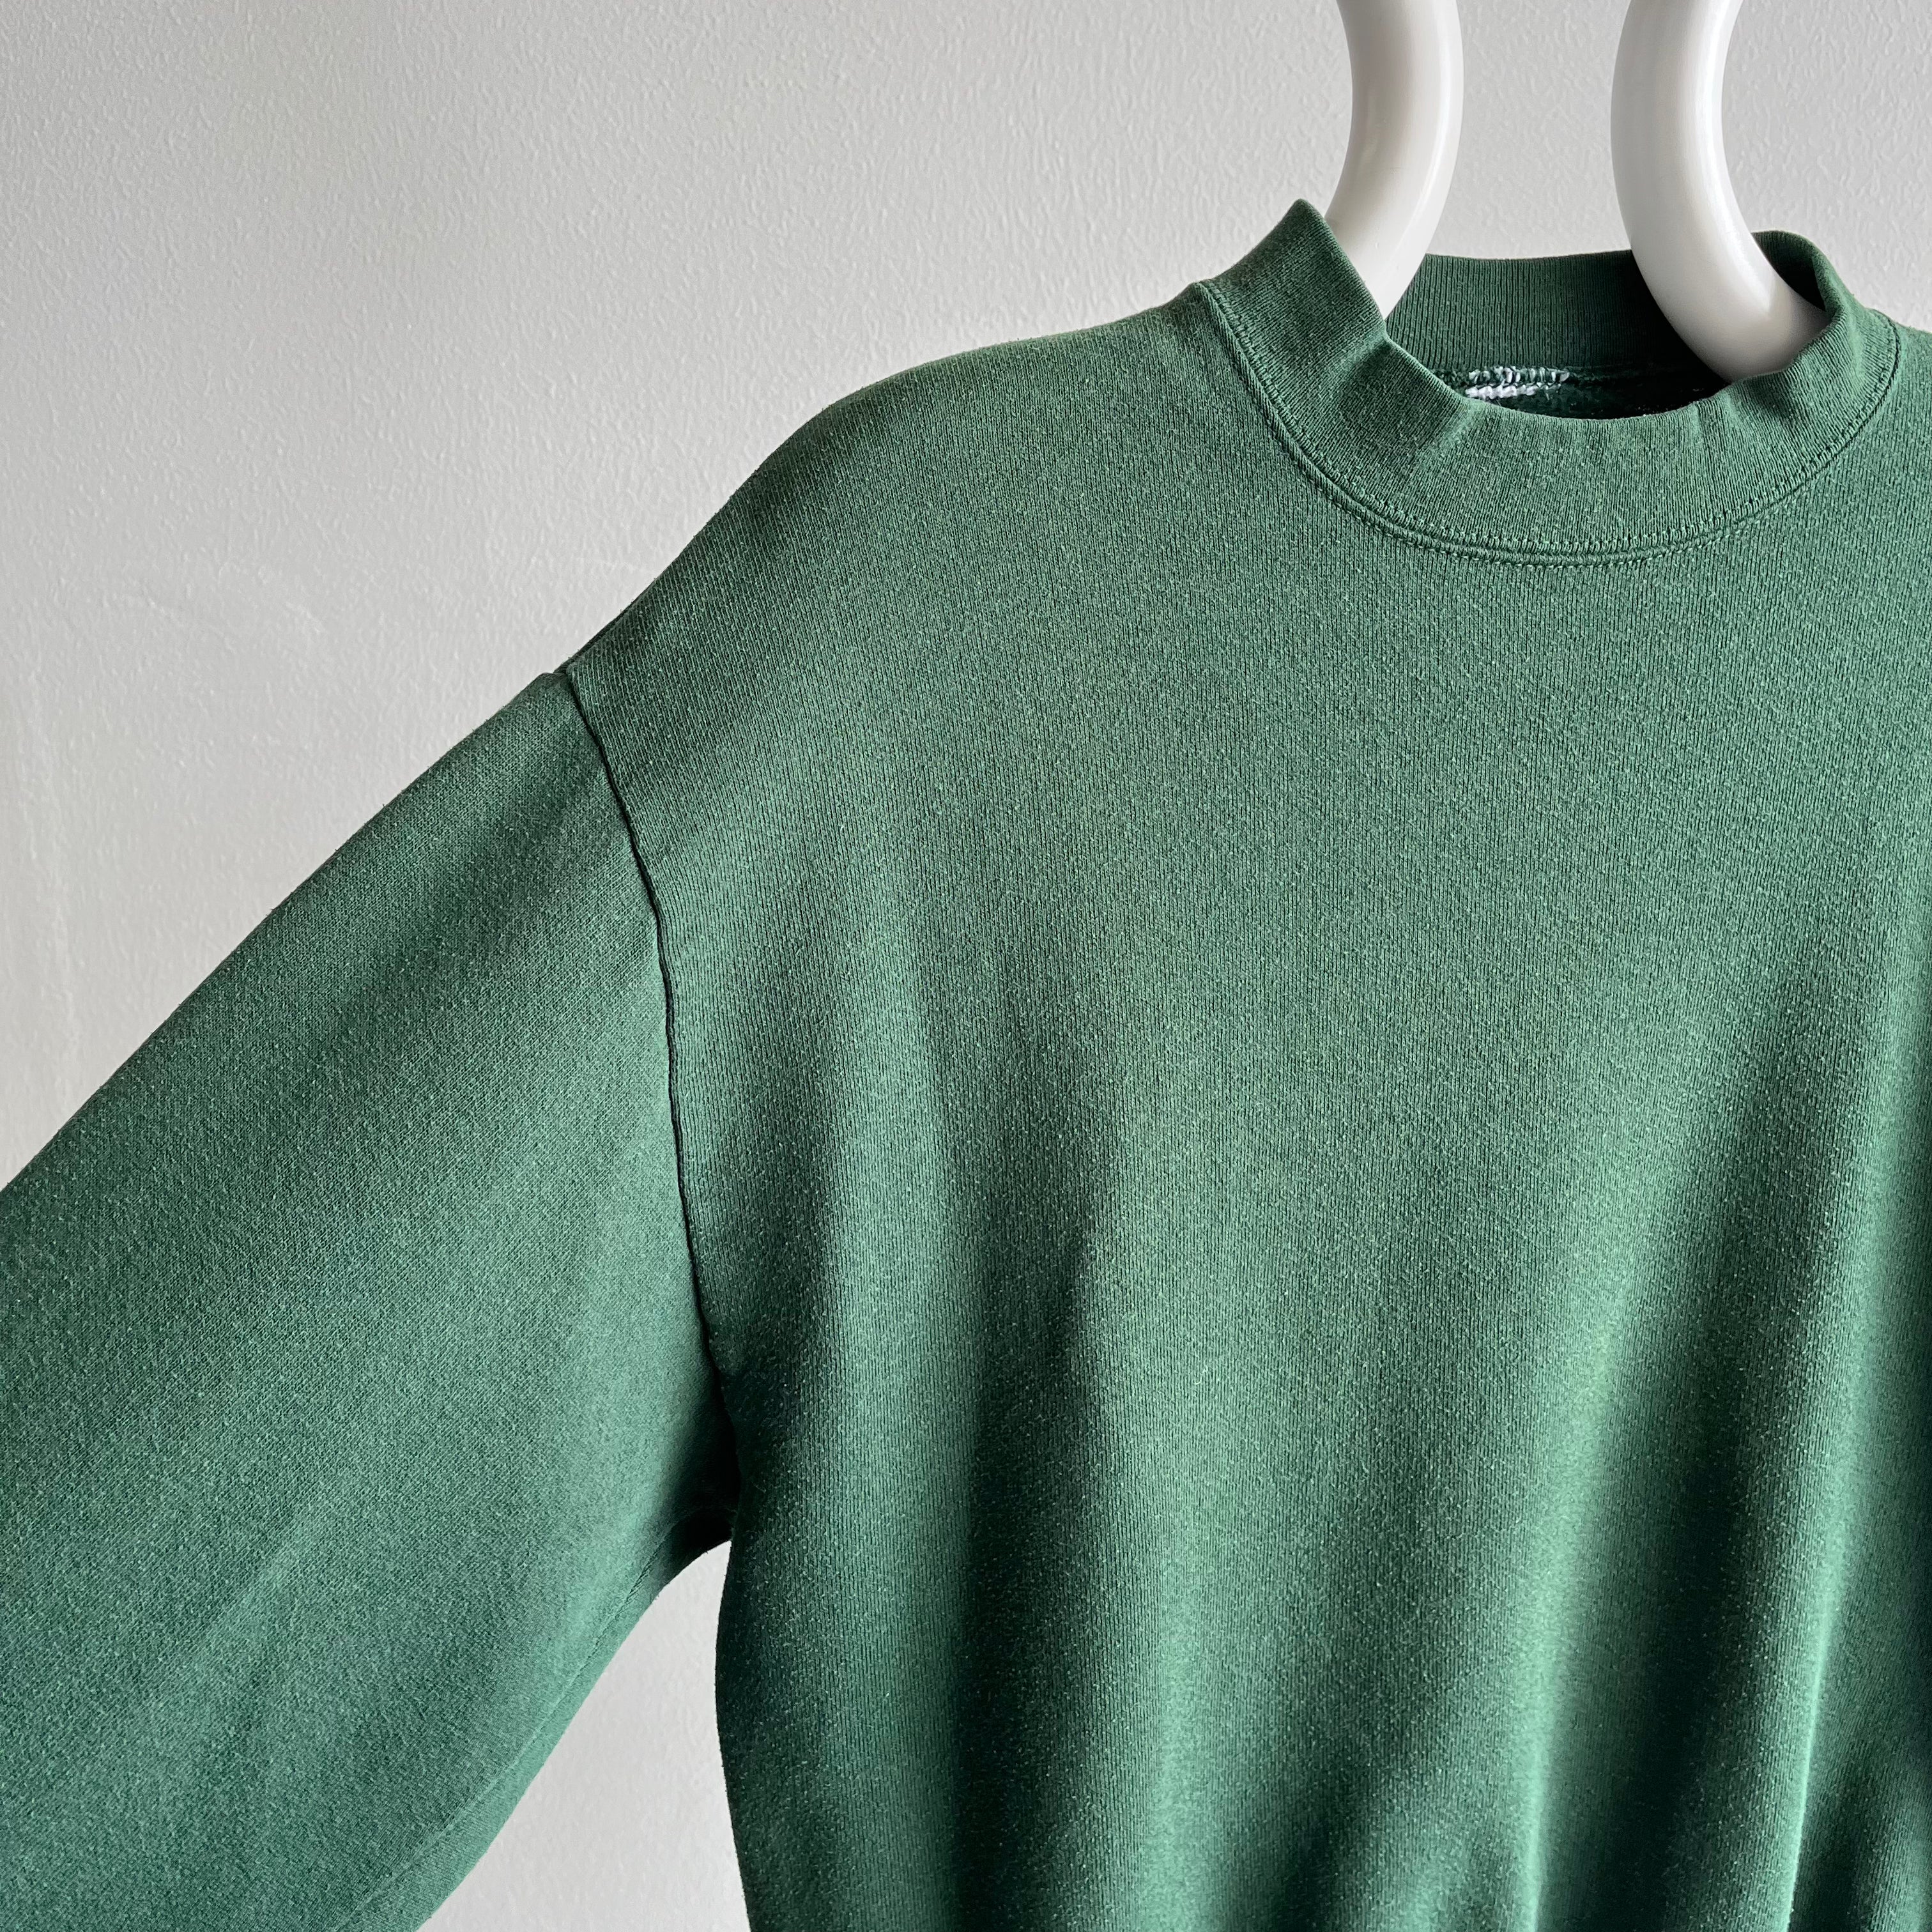 1980/90s Hunter Green Sweatshirt with a Slight Mock Neck